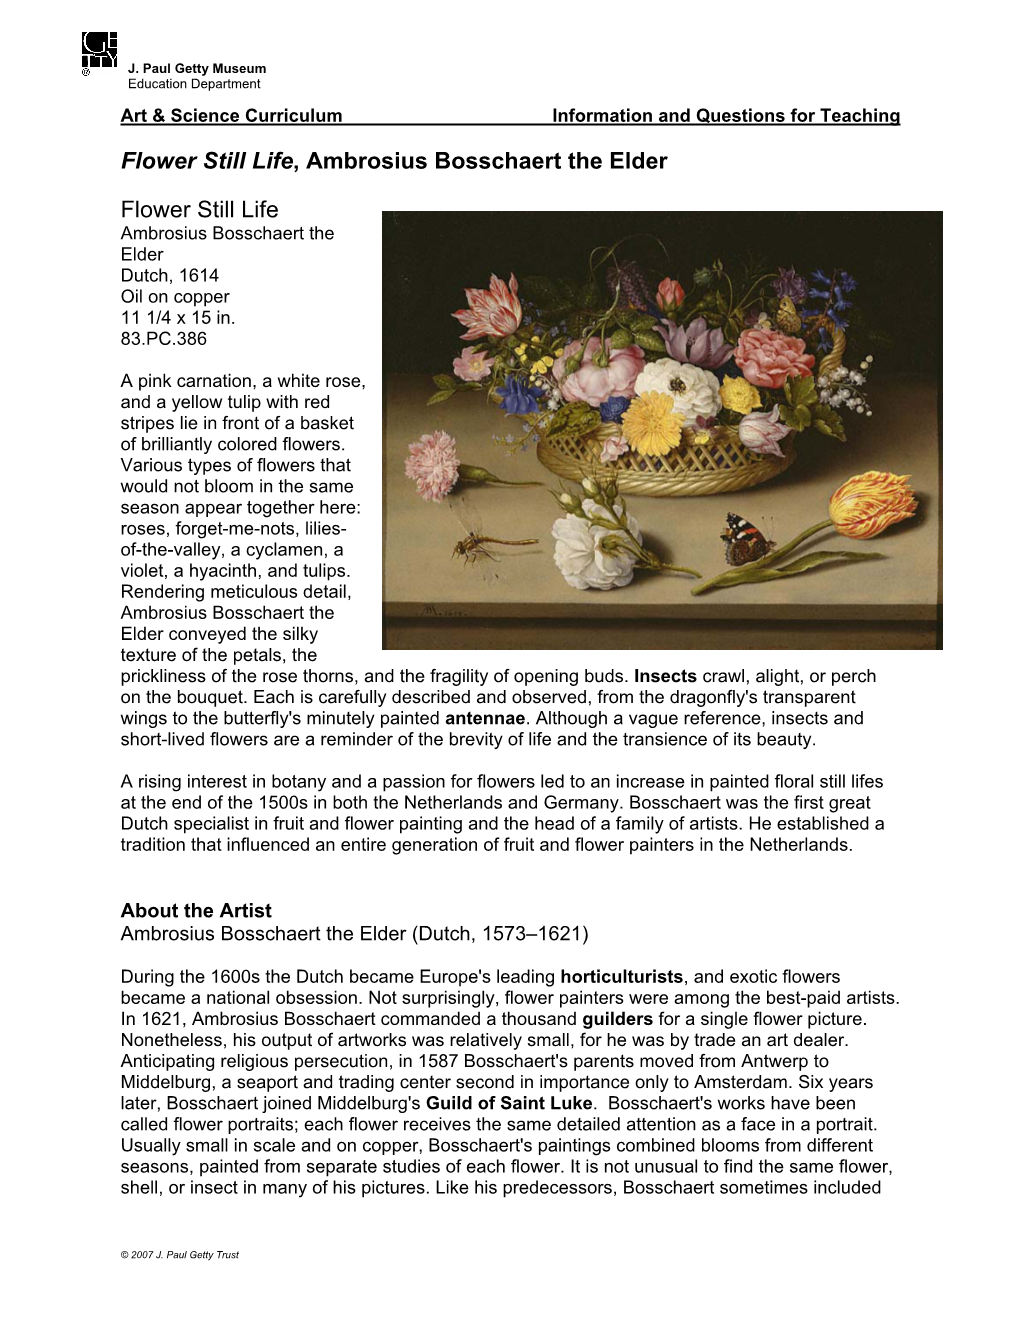 Flower Still Life, Ambrosius Bosschaert the Elder